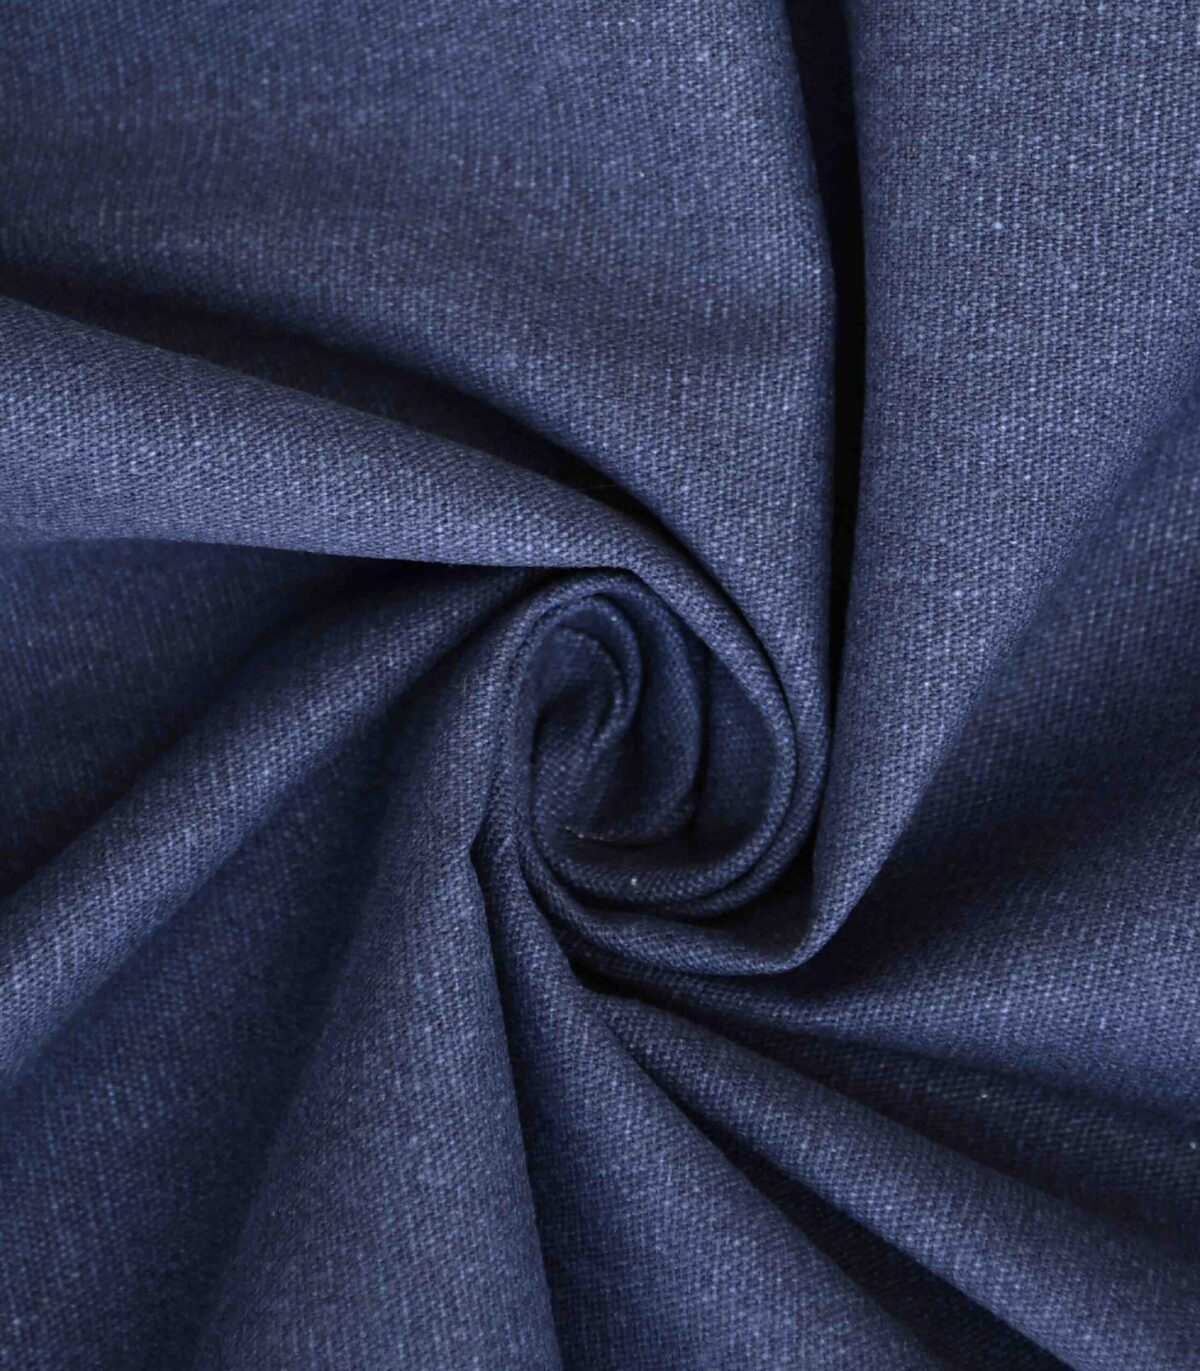 Cotton Dark Blue Indigo Denim Fabric